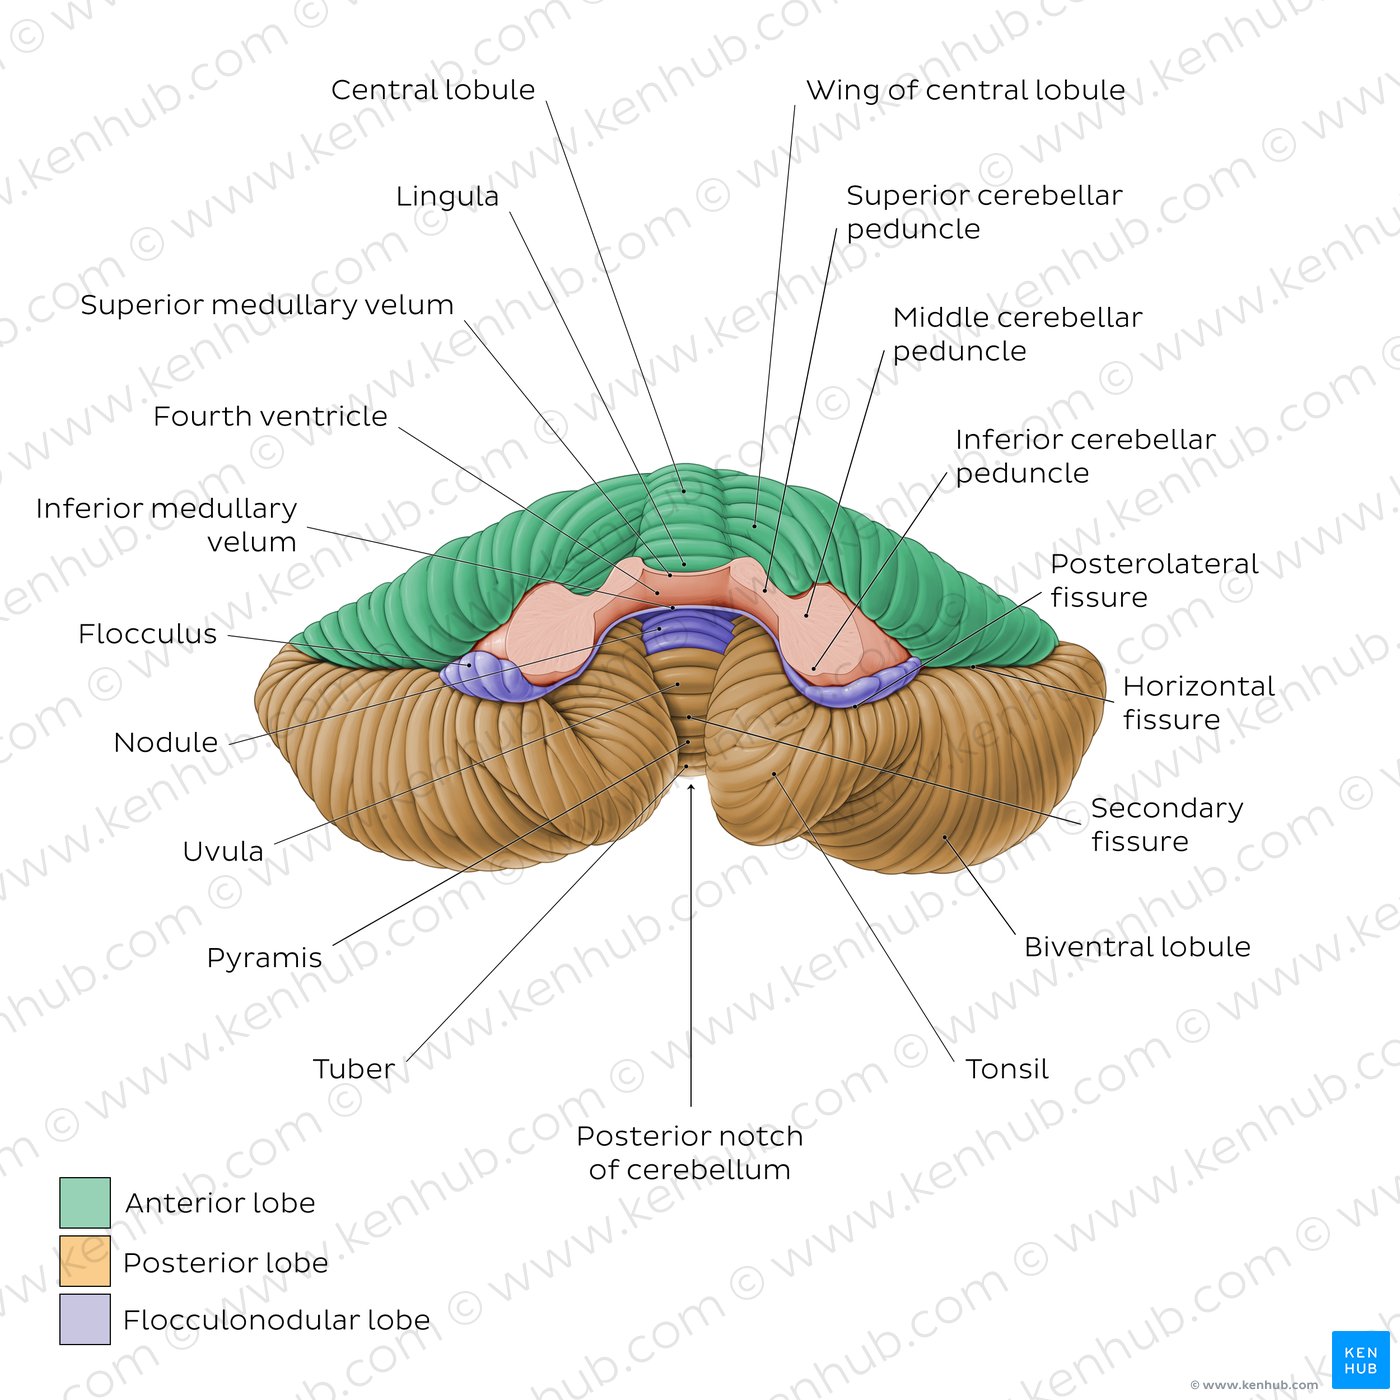 Anatomy of the cerebellum - Anterior view